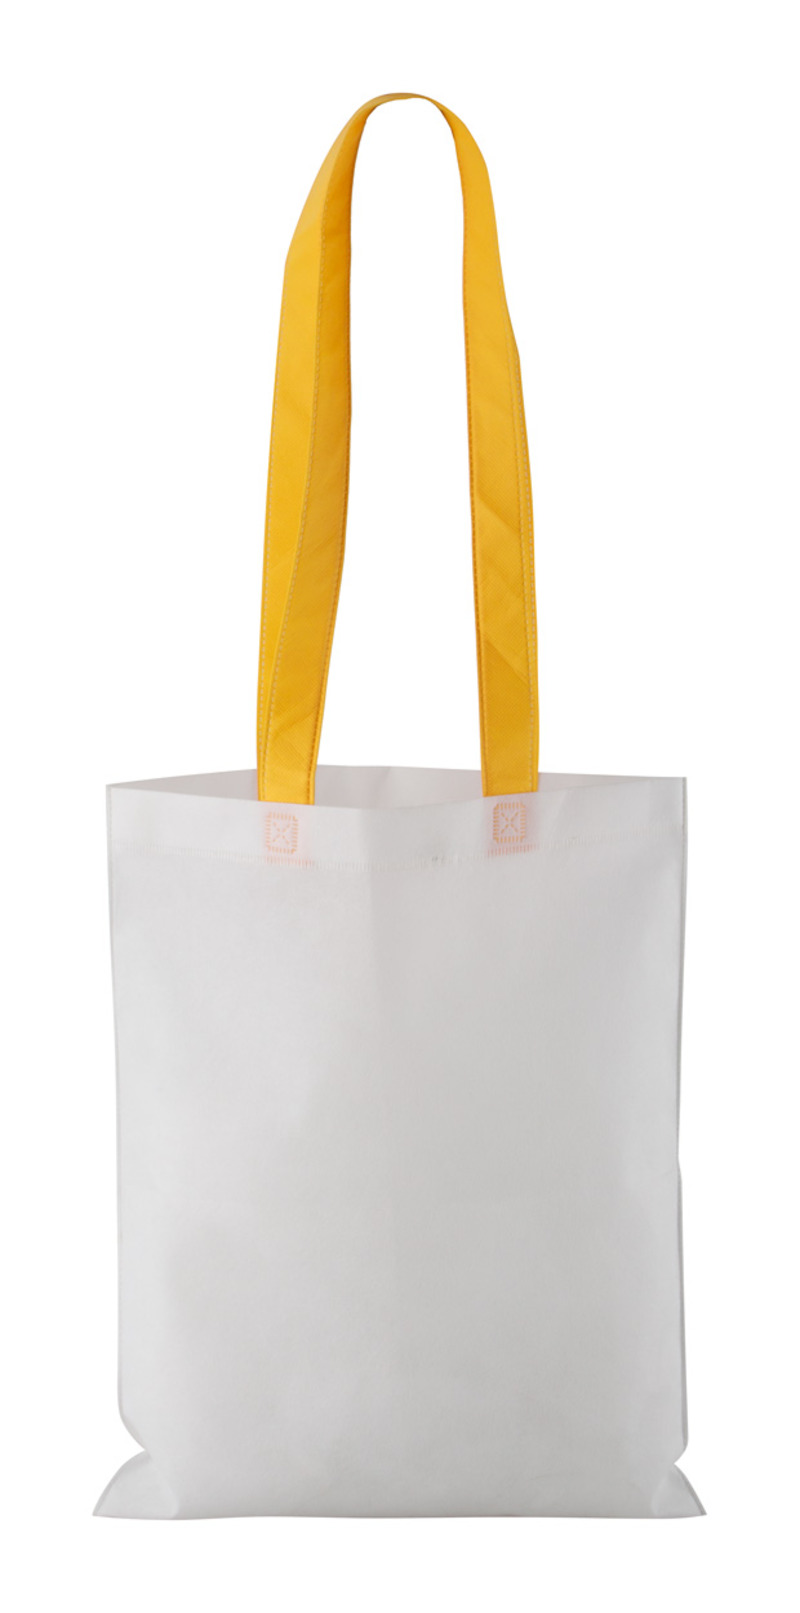 Rambla shopping bag